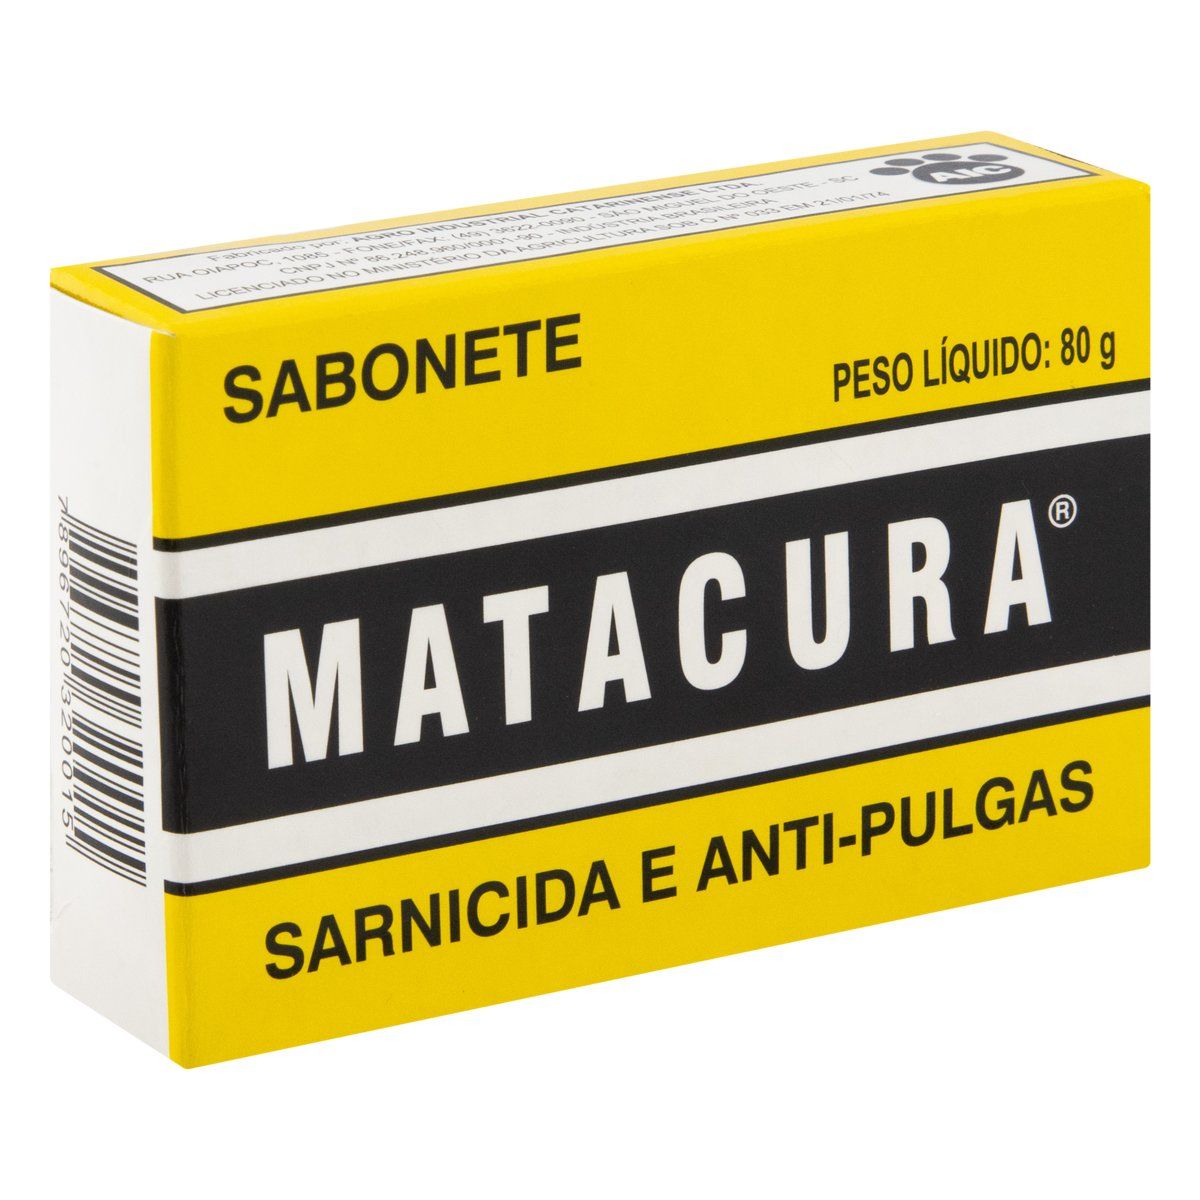 Sabonete Uso Veterinário Matacura Sarnicida e Anti-Pulgas 80g image number 3